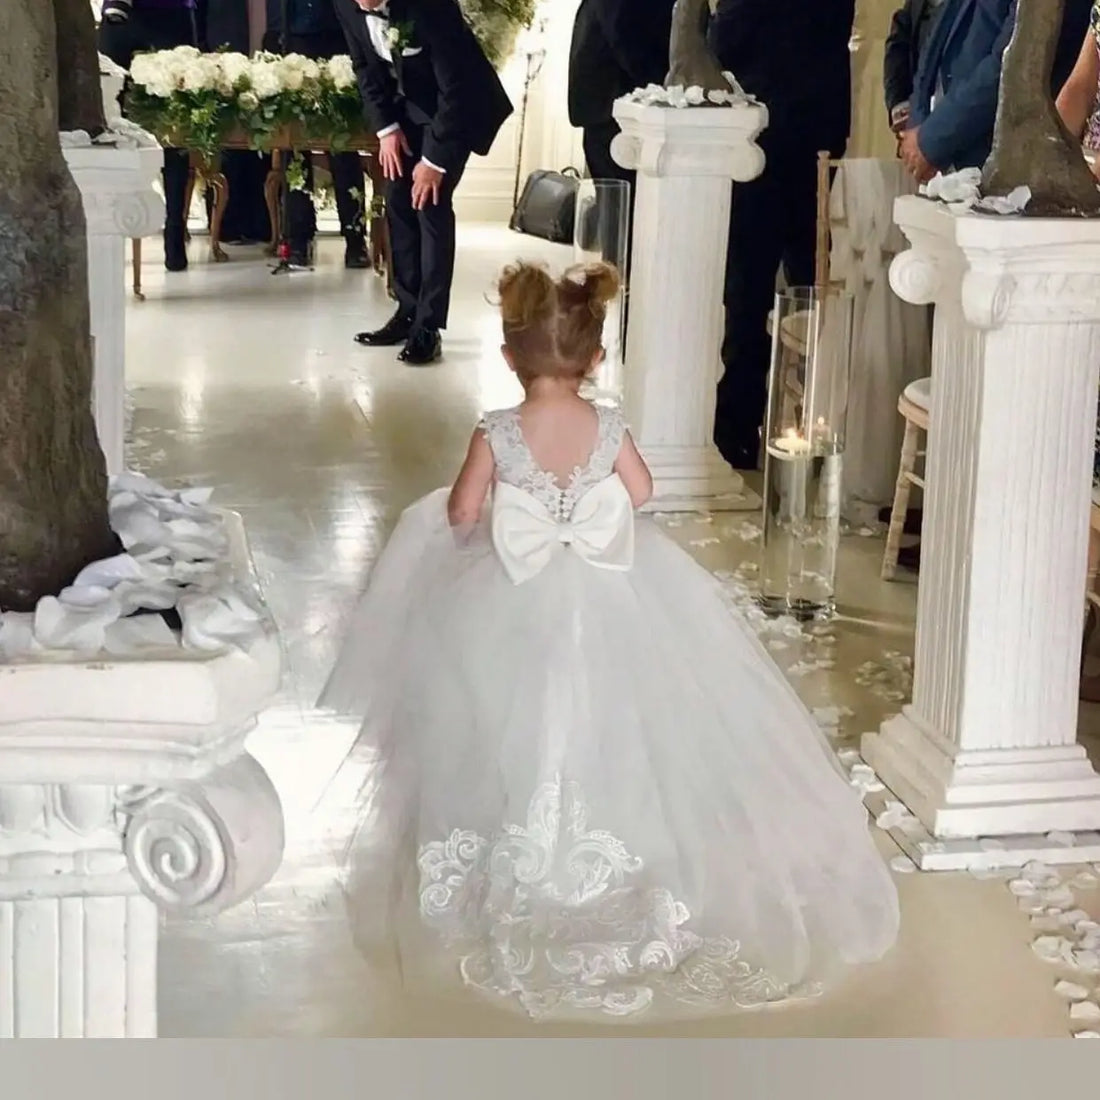 Maxi Formal Prom Sleeveless White Tulle Flower Girl Dress by Baby Minaj Cruz